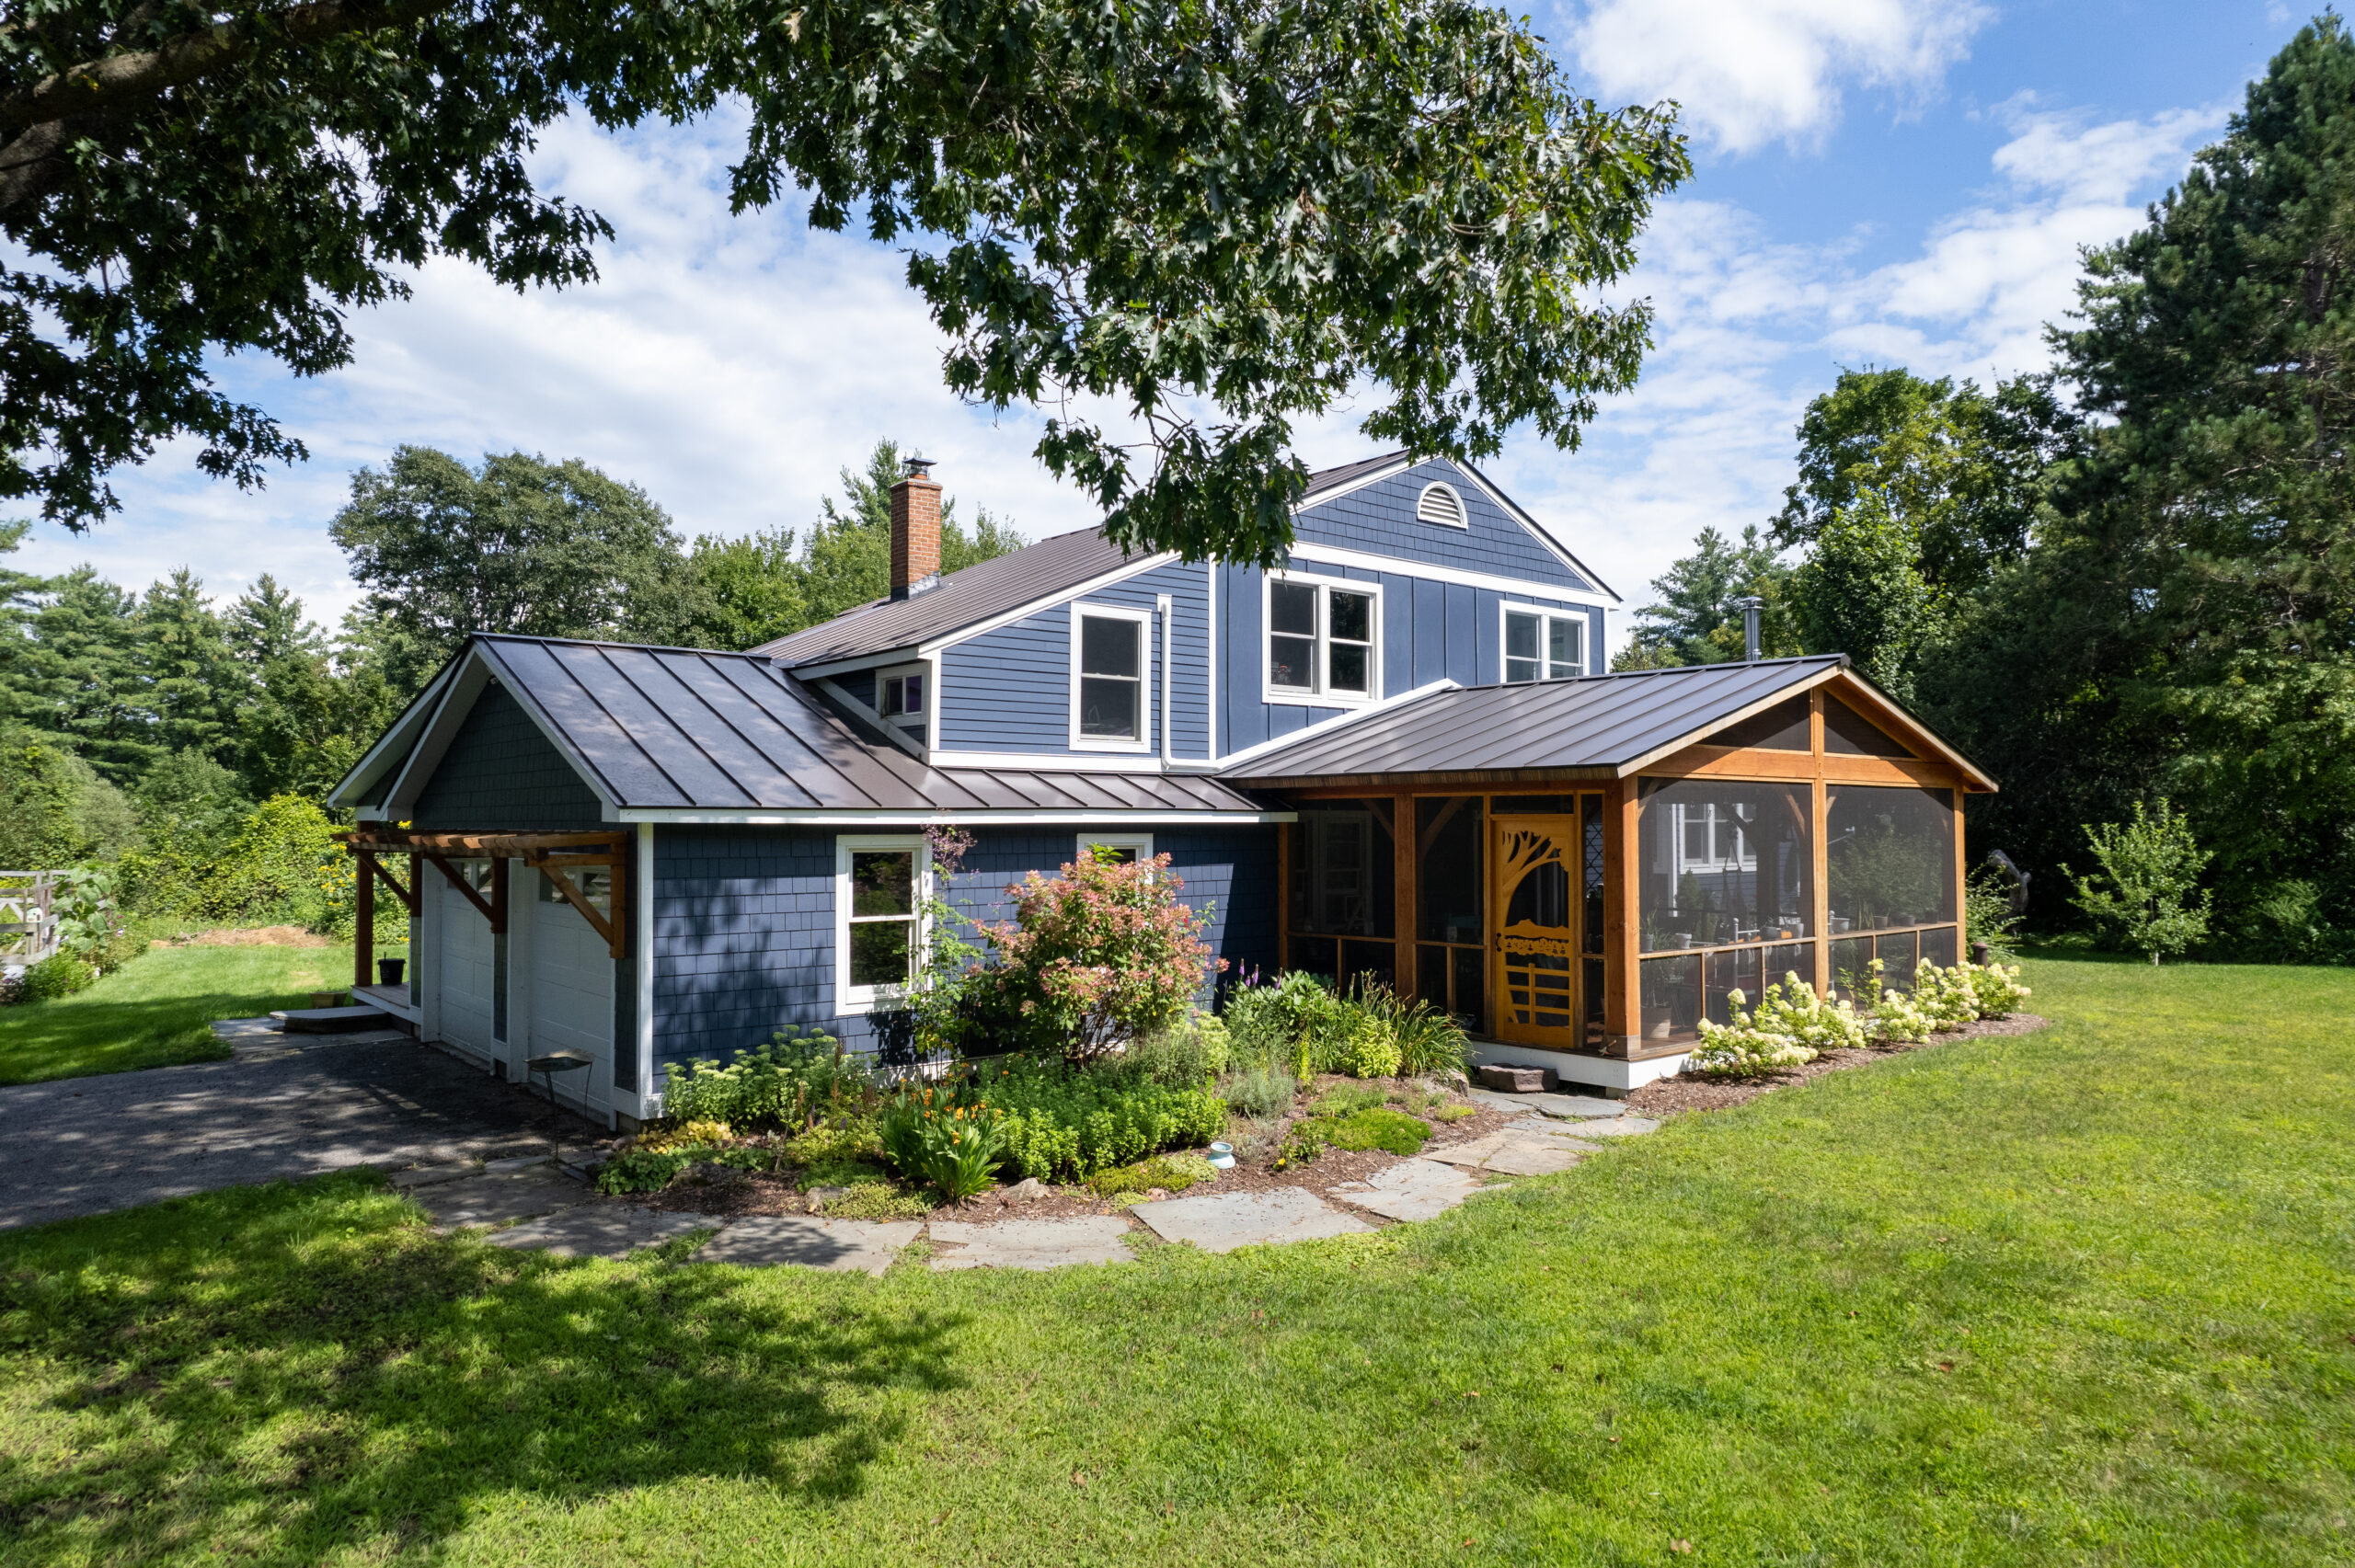 Standing Seam Metal Roof – Modern Farmhouse in Shelburne, VT